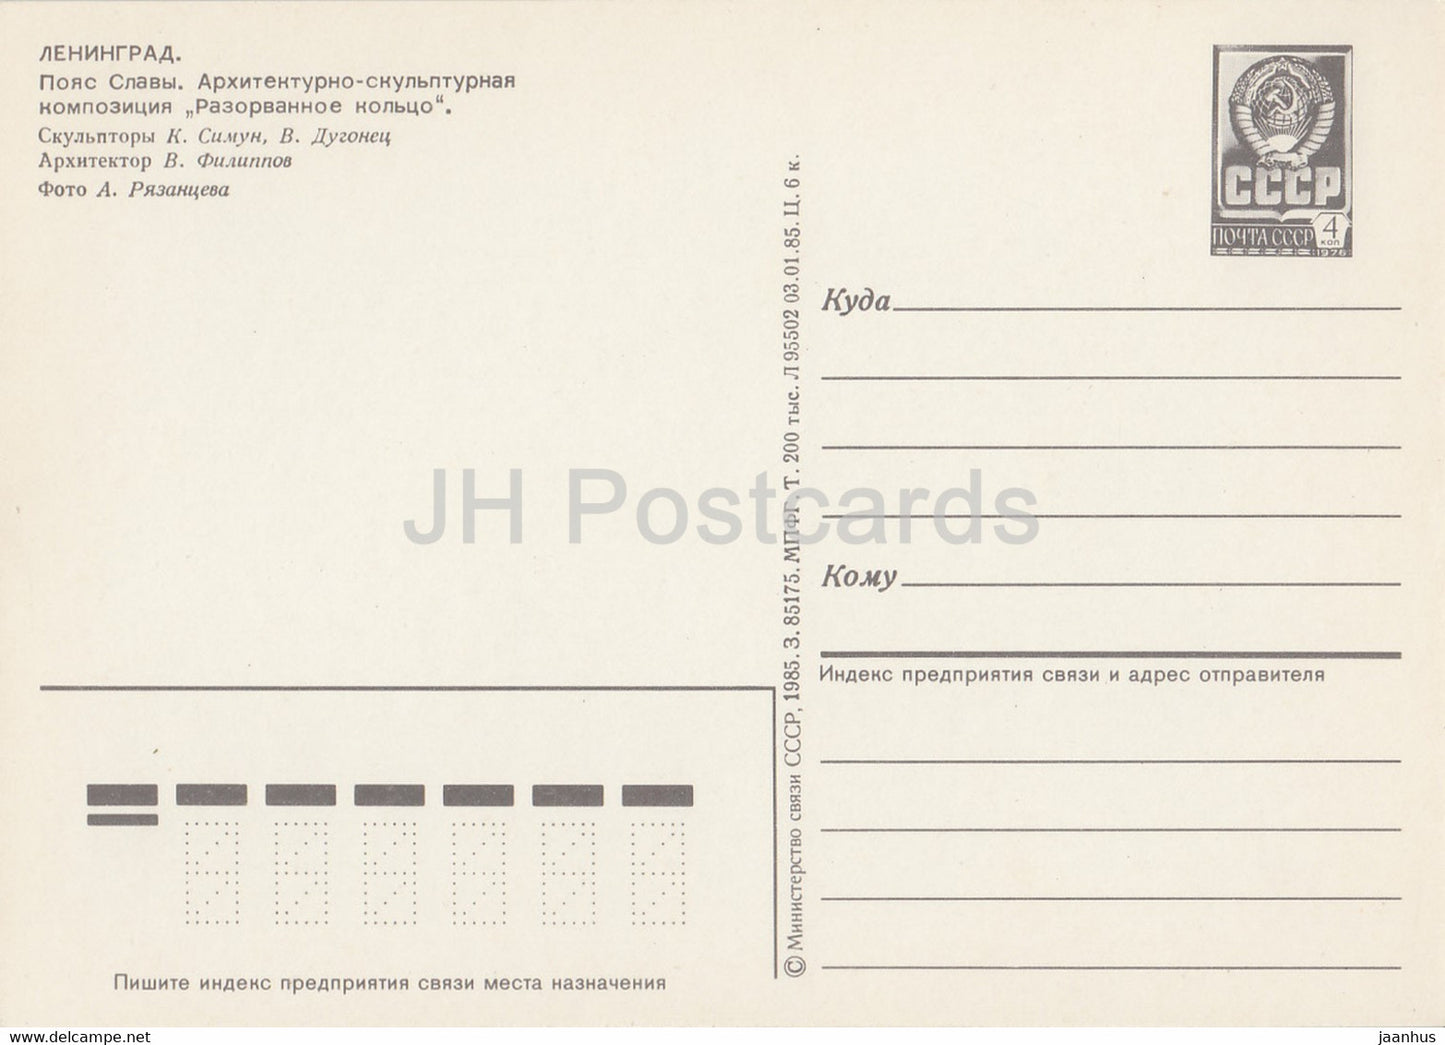 Leningrad - St Petersburg - Belt of Glory - memorial - postal stationery - 1985 - Russia USSR - unused